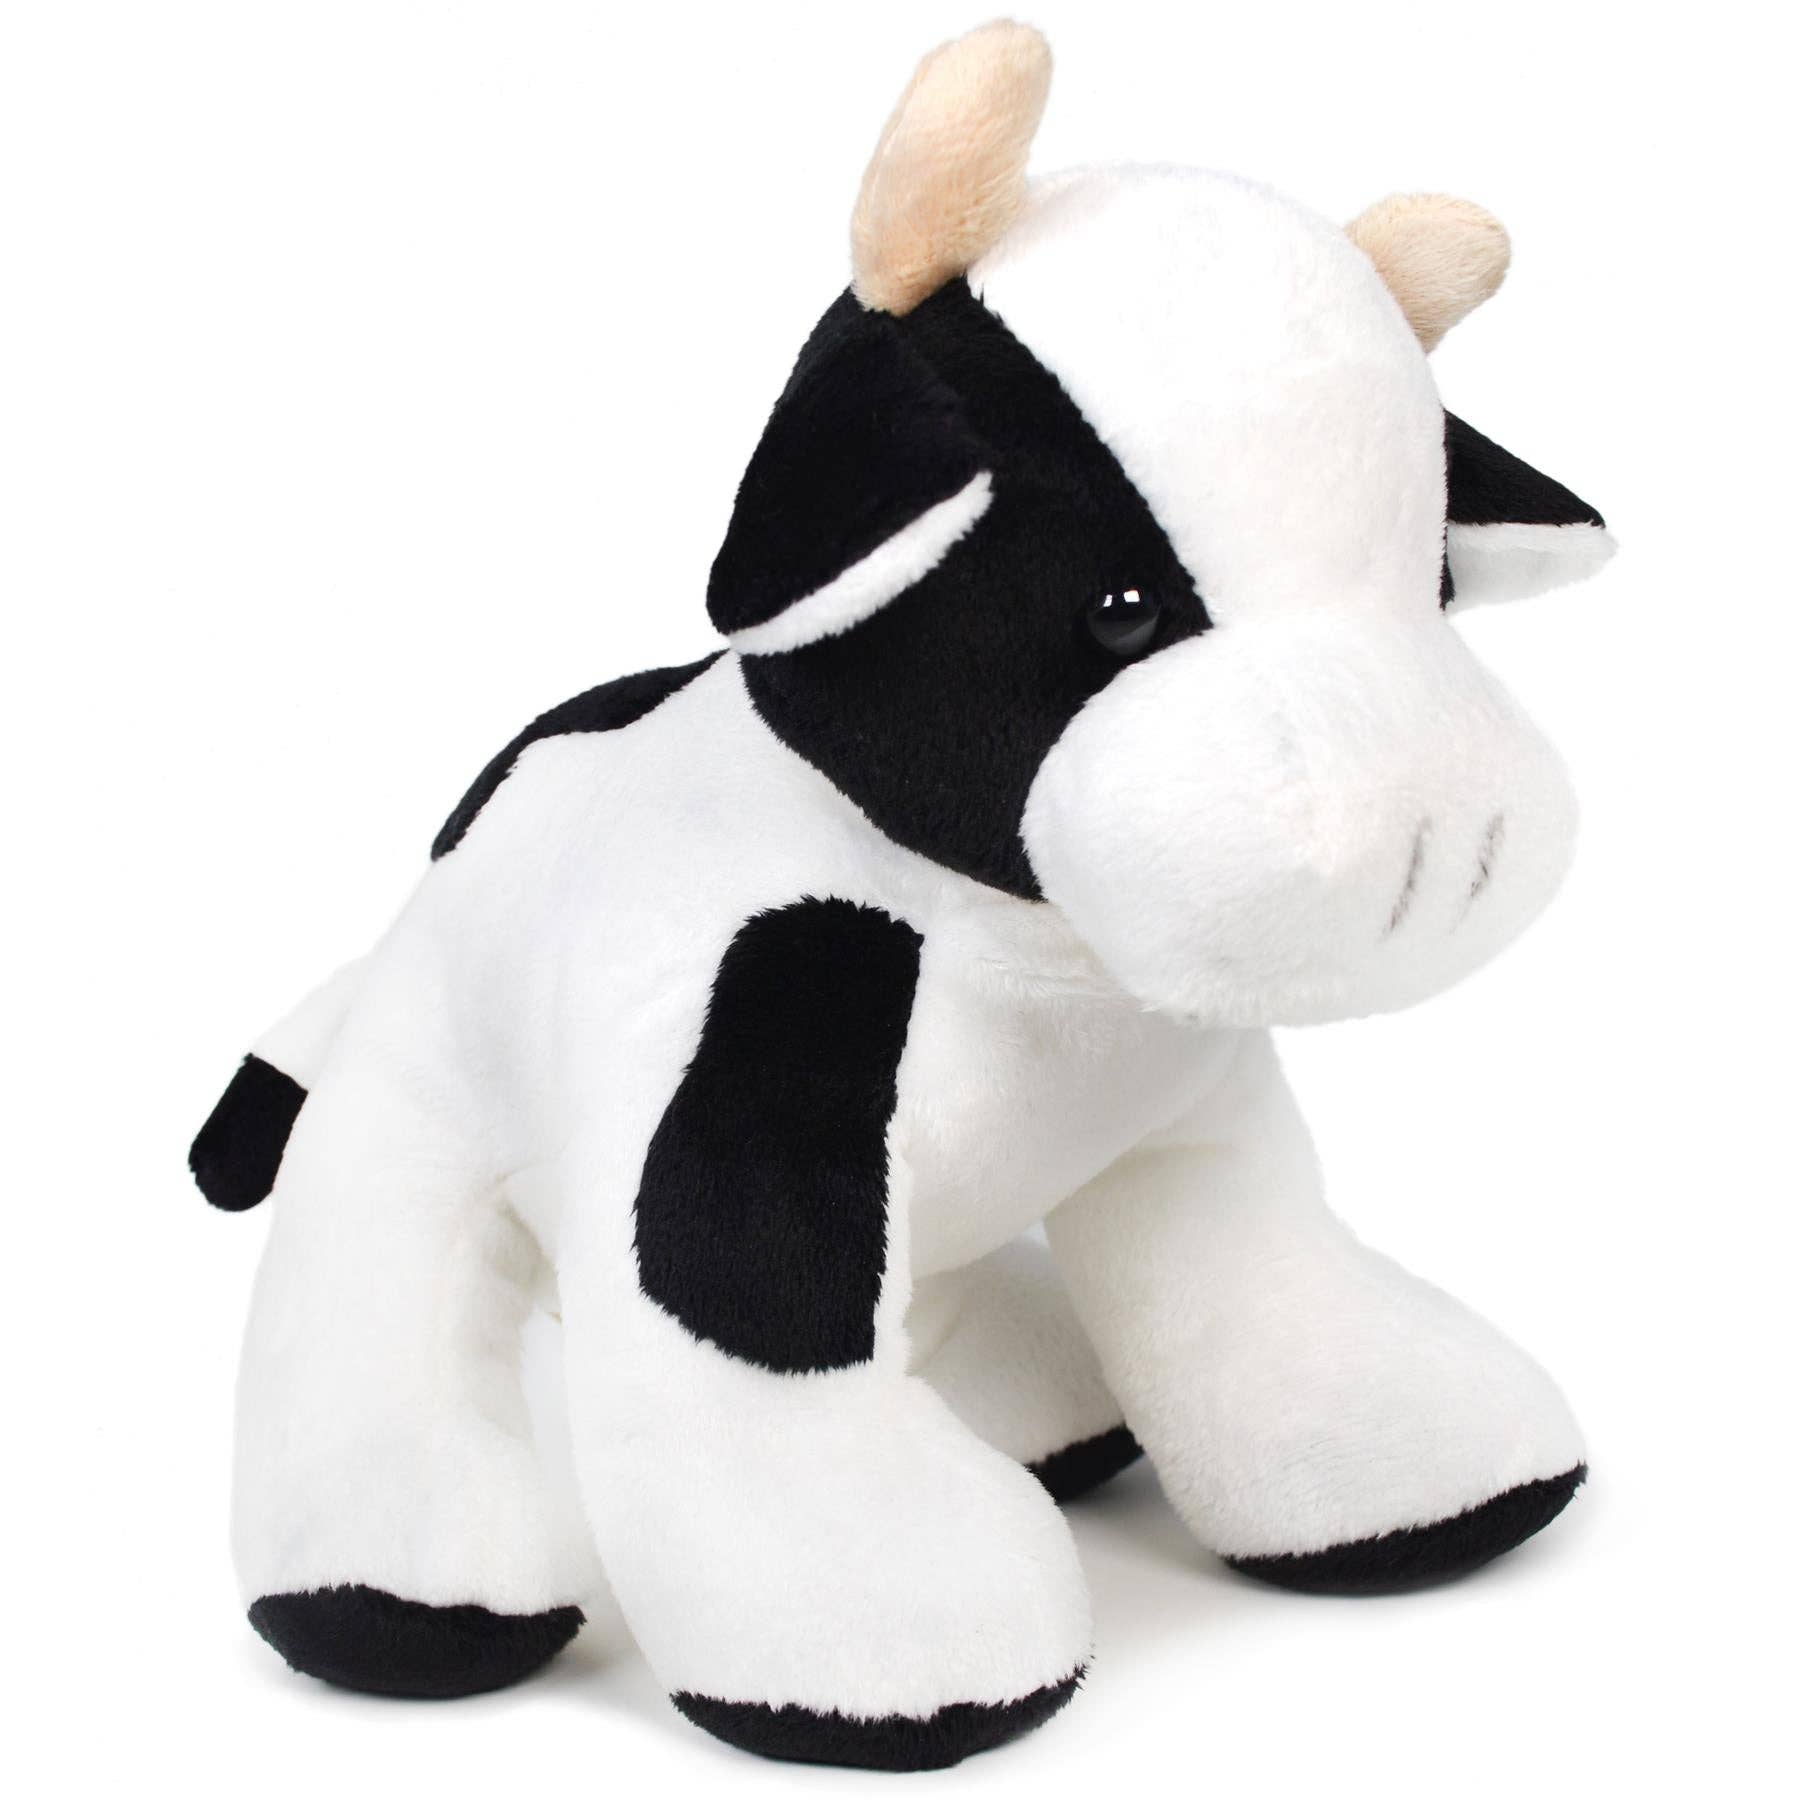 Coraline The Cow, 7 Inch Stuffed Animal Plush